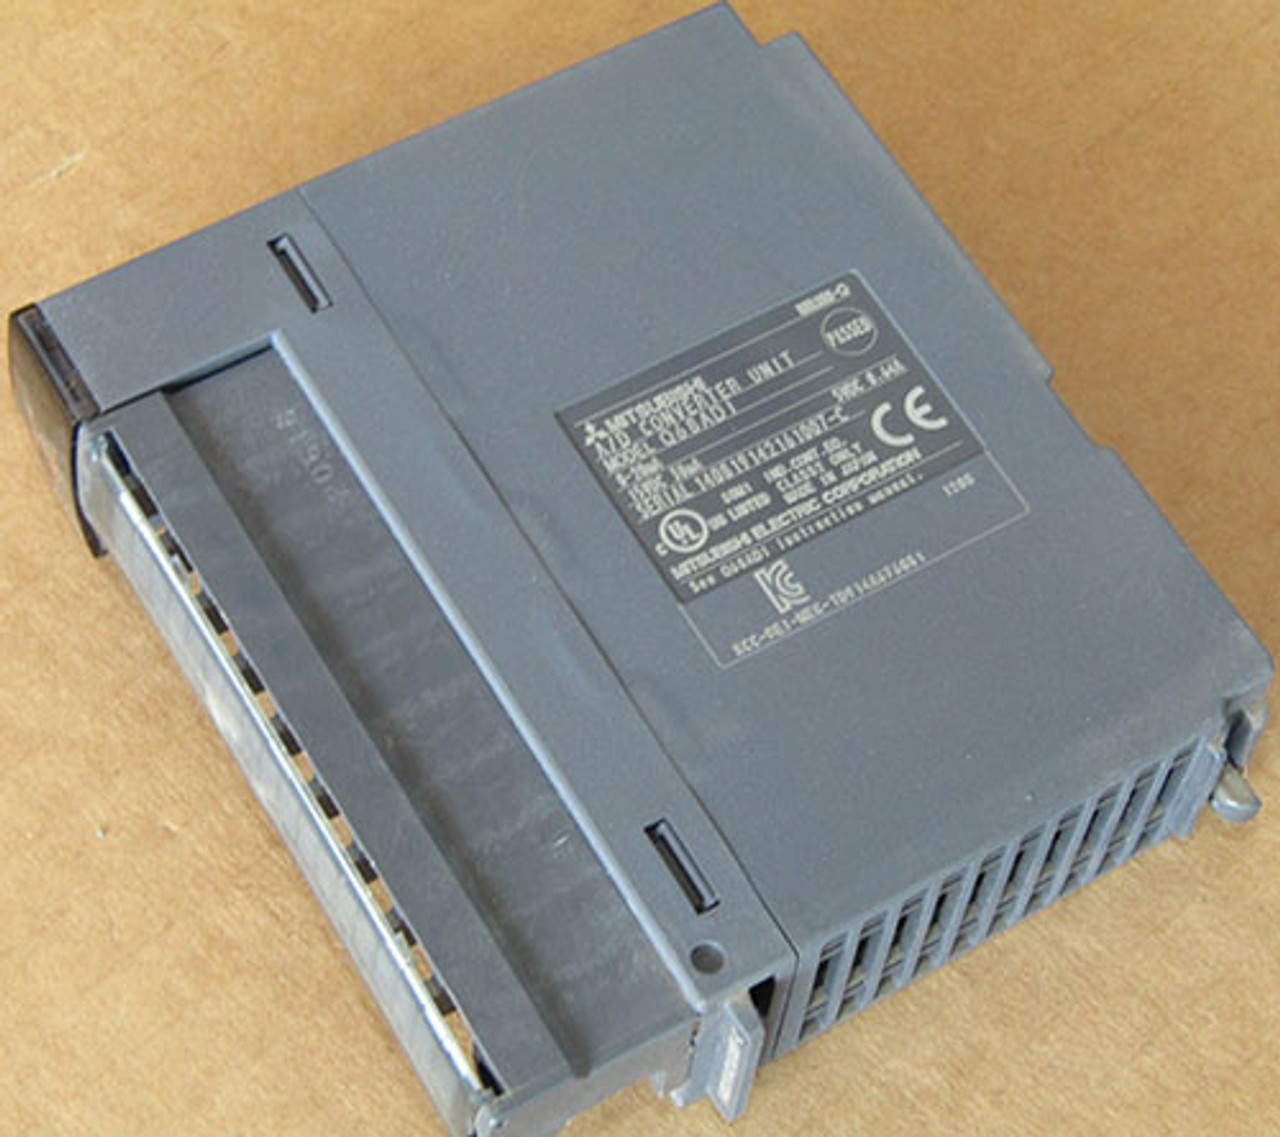 Mitsubishi Melsec-Q Q68ADI A/D Converter Module 0-20mA 15VDC 30mA - Used